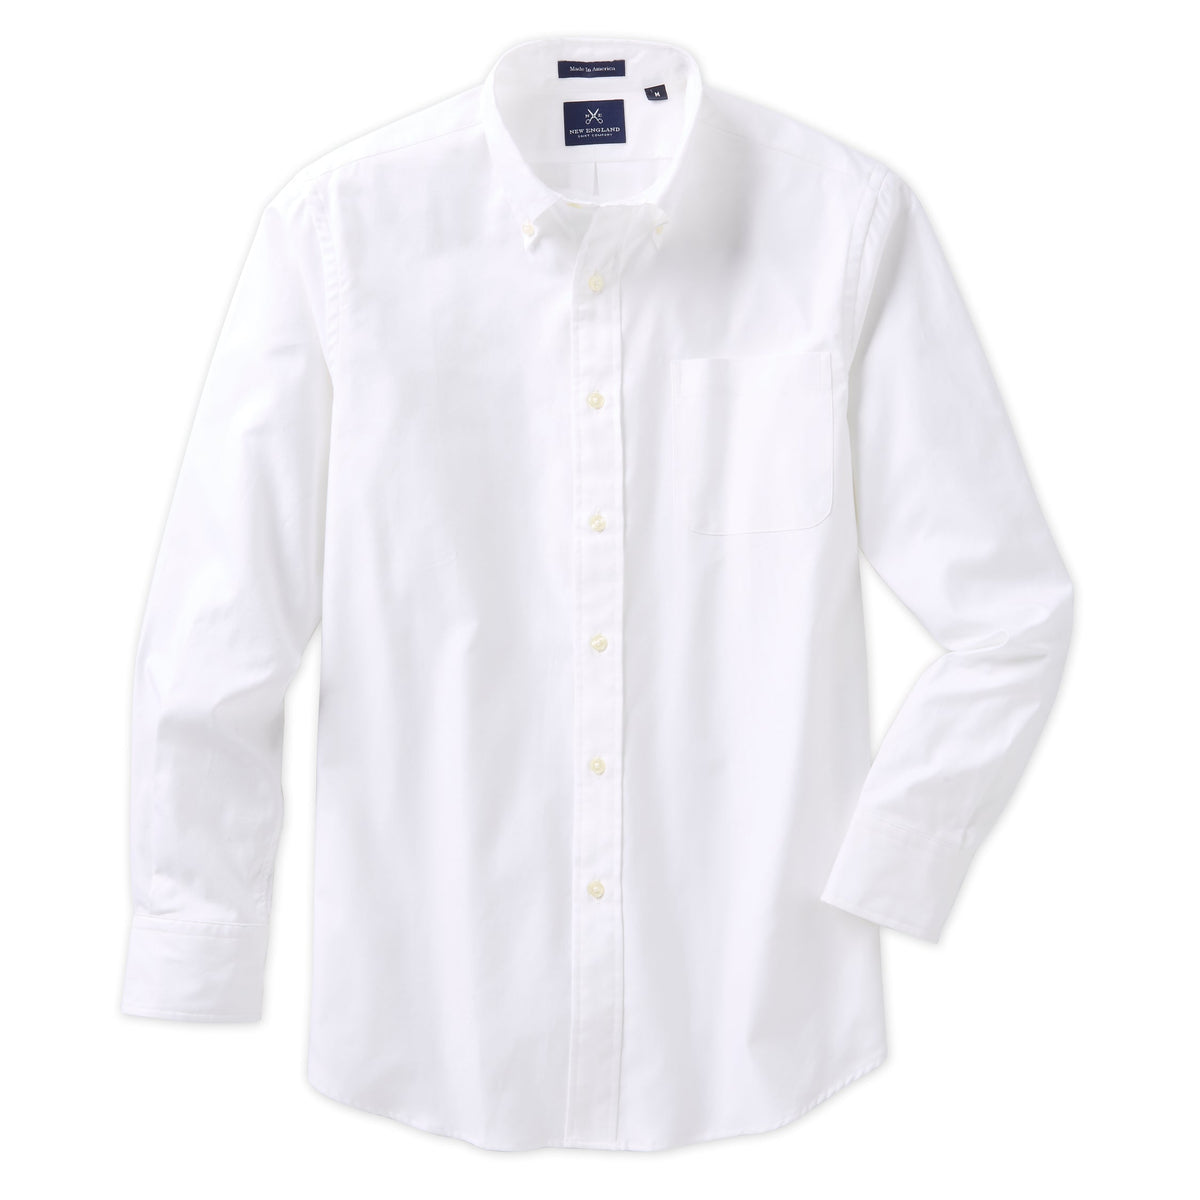 Bristol Button-Down White Oxford Sport Shirt